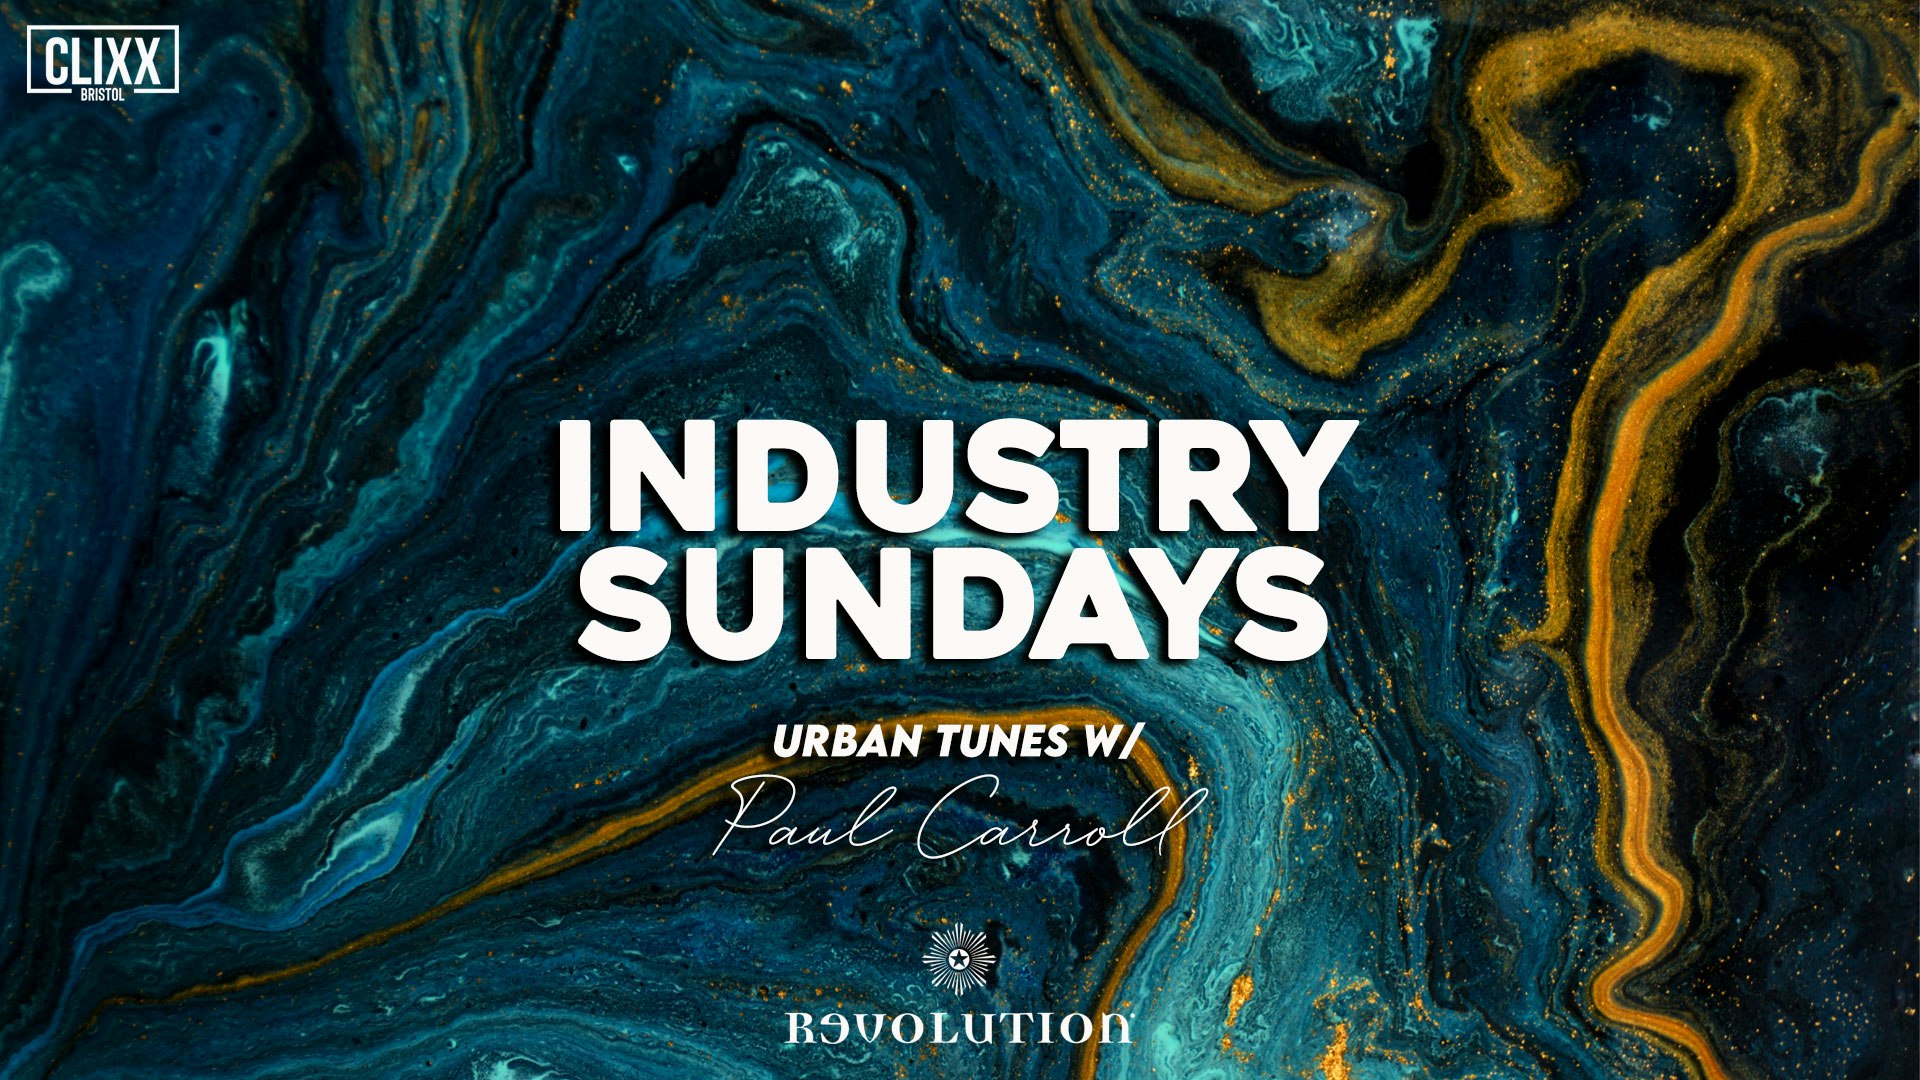 Industry Sundays – Urban Tunes w/ Paul Carroll – Limited FREE ENTRY Tickets